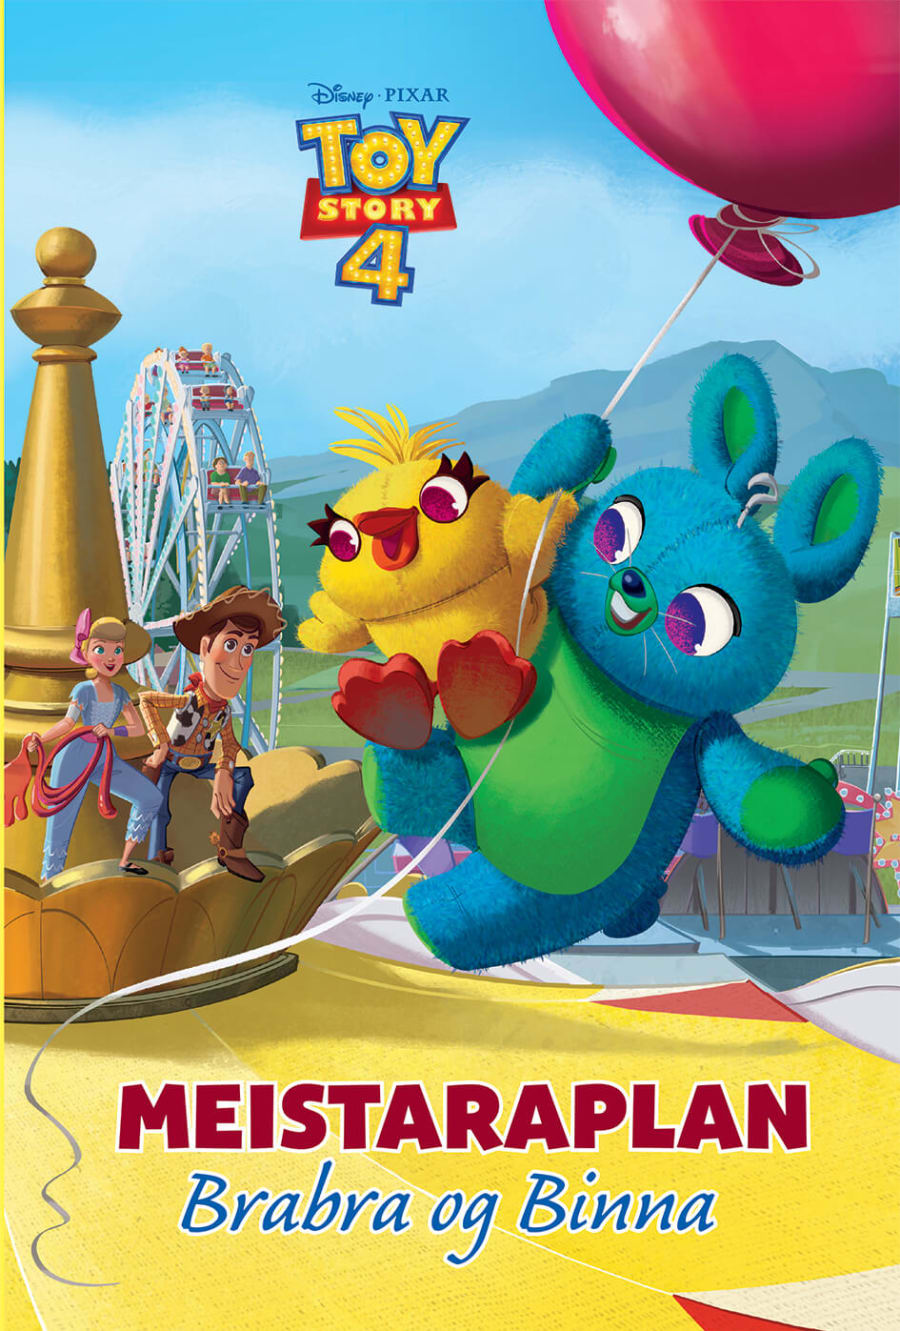 Meistaraplan Brabra og Binna: Toy Story 4